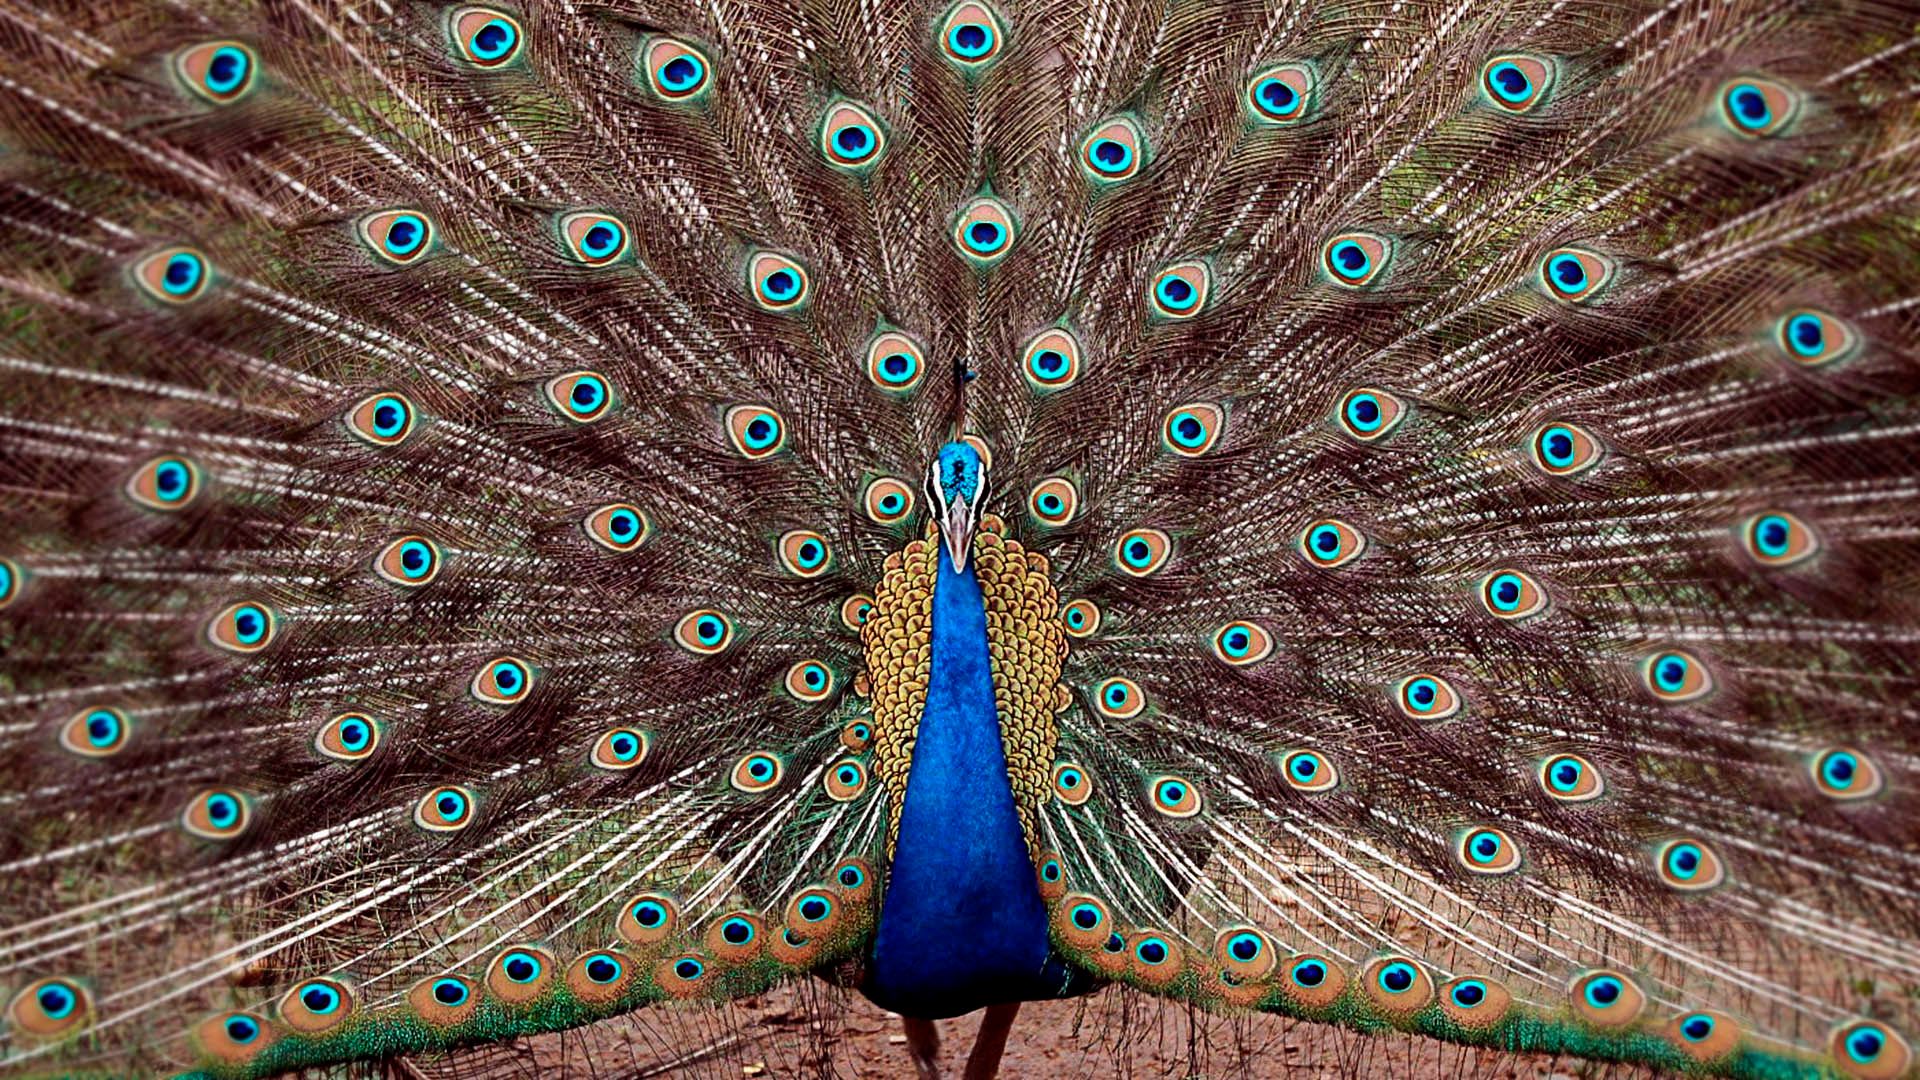 Peacock at Tata Steel Zoological Park in Jamshedpur,India.jpg